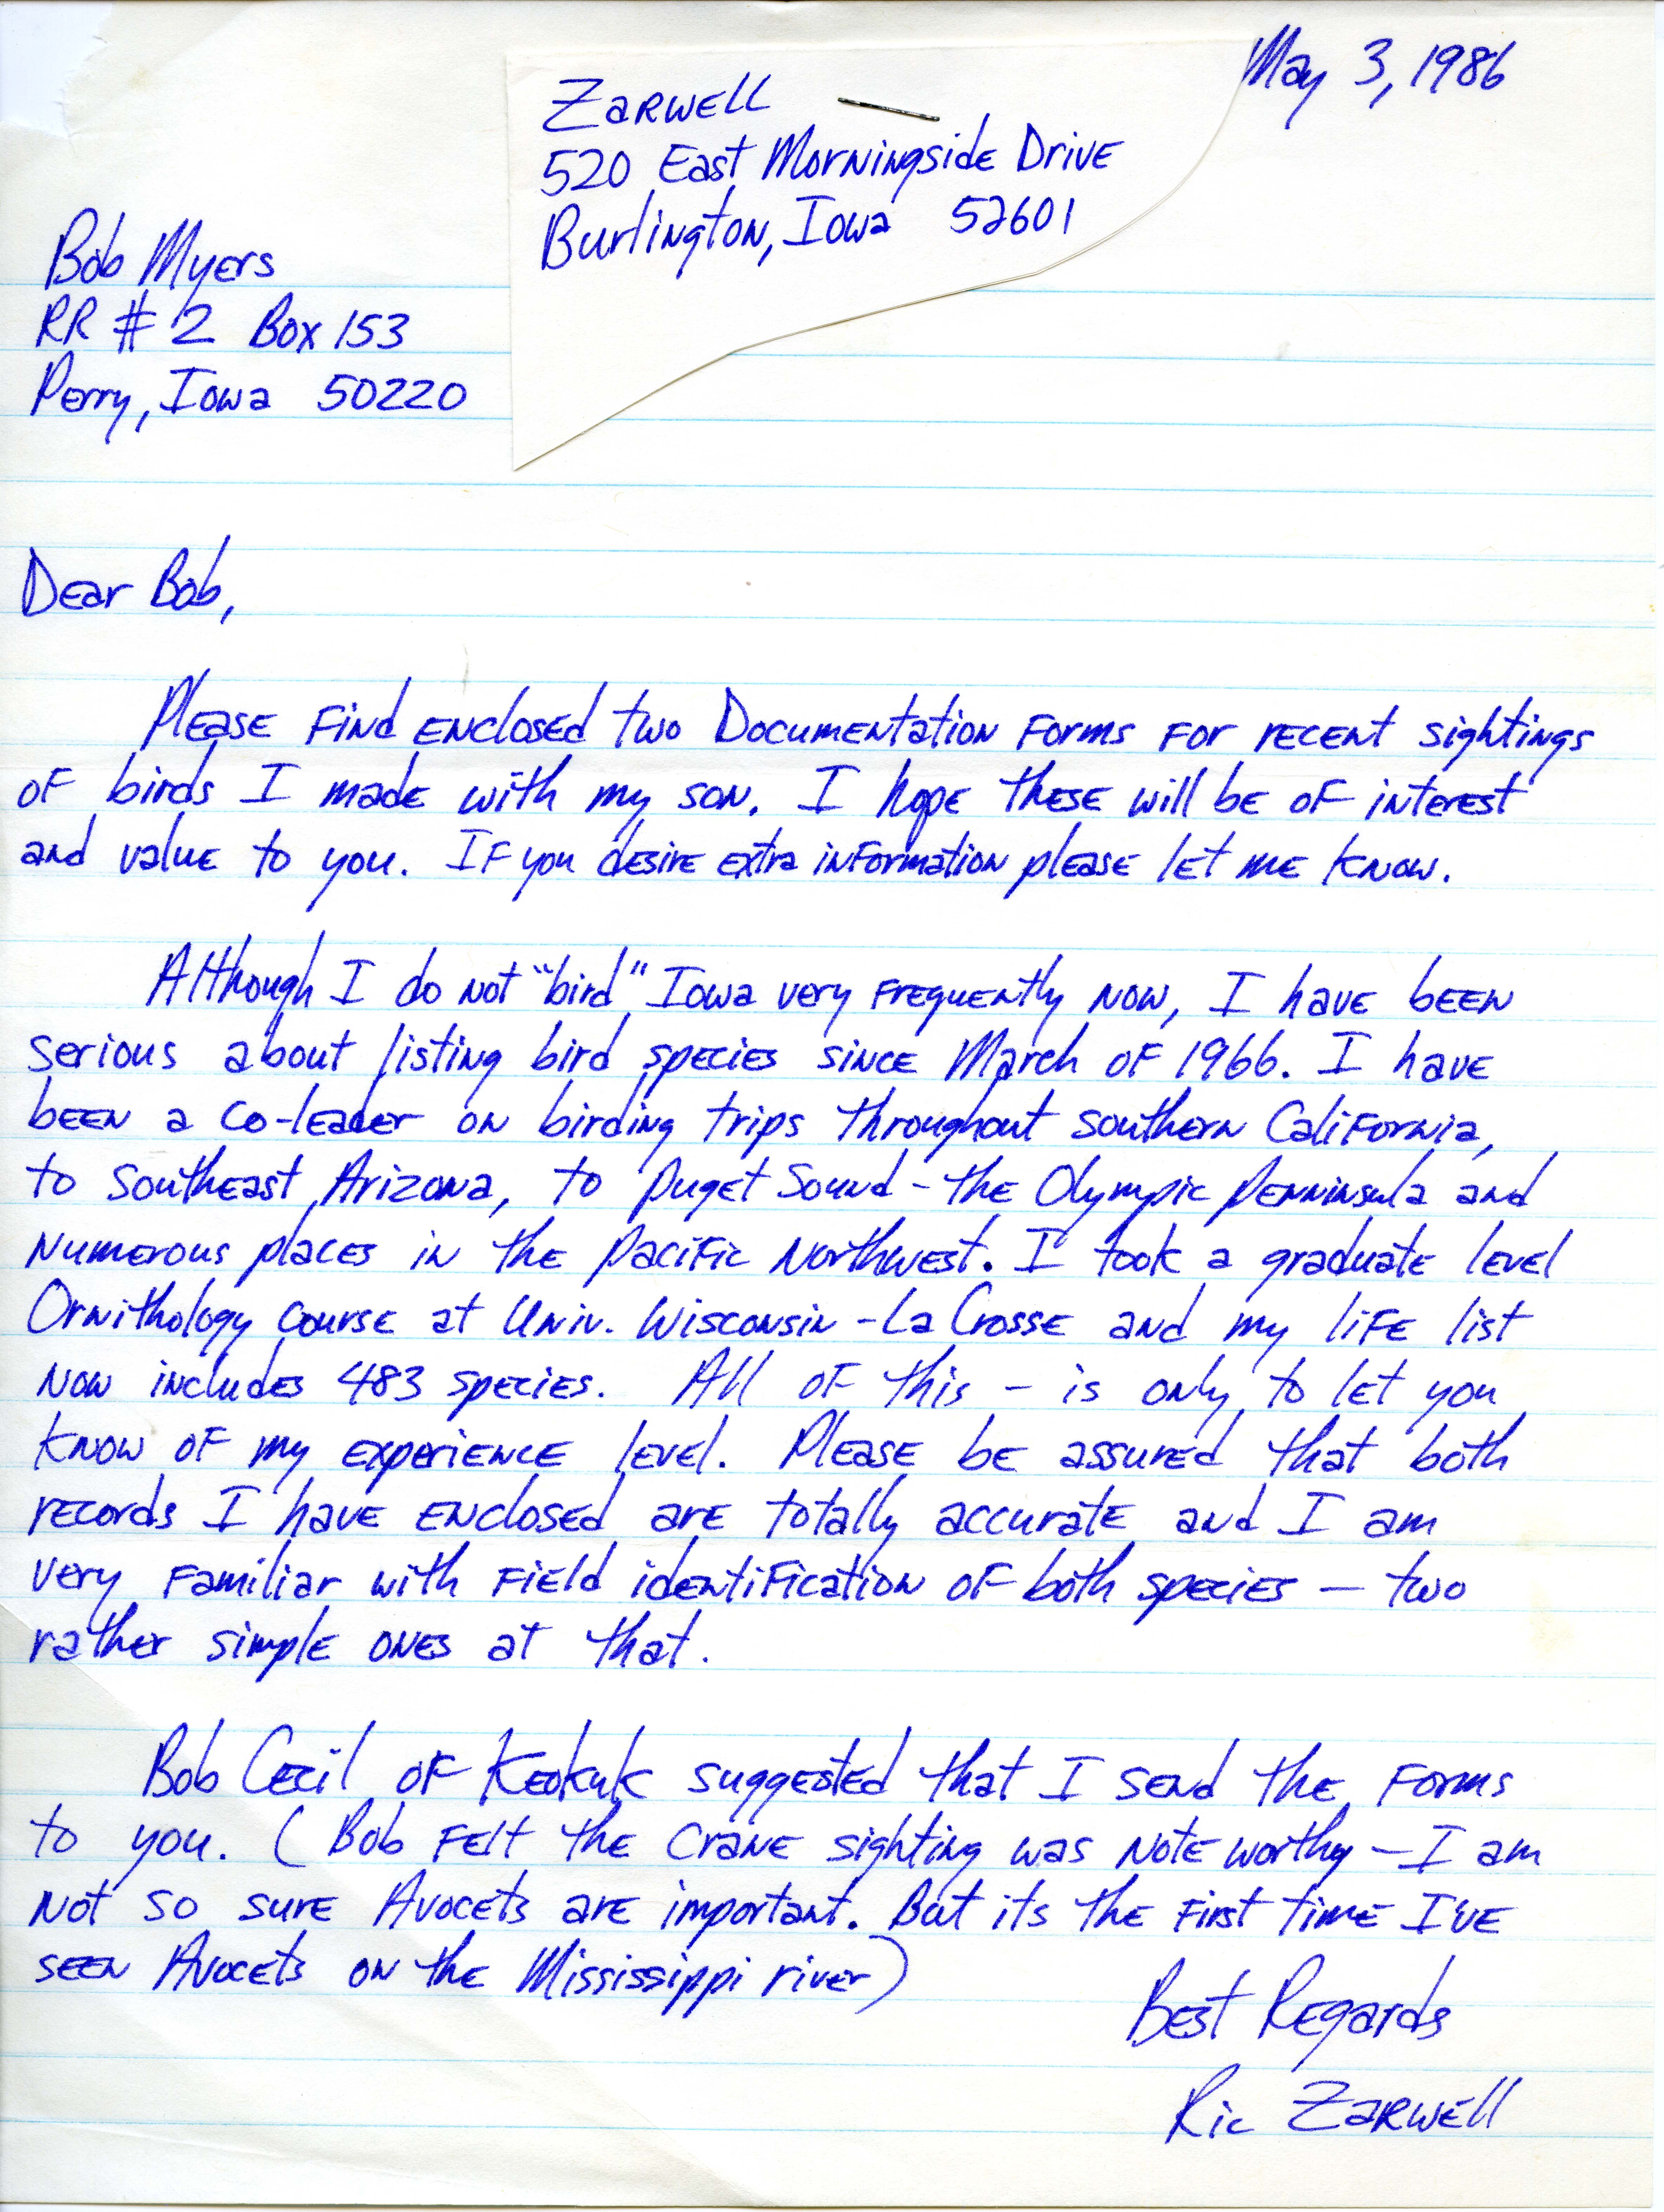 Ric Zarwell letter to Robert Myers regarding birding experience, May 3, 1986